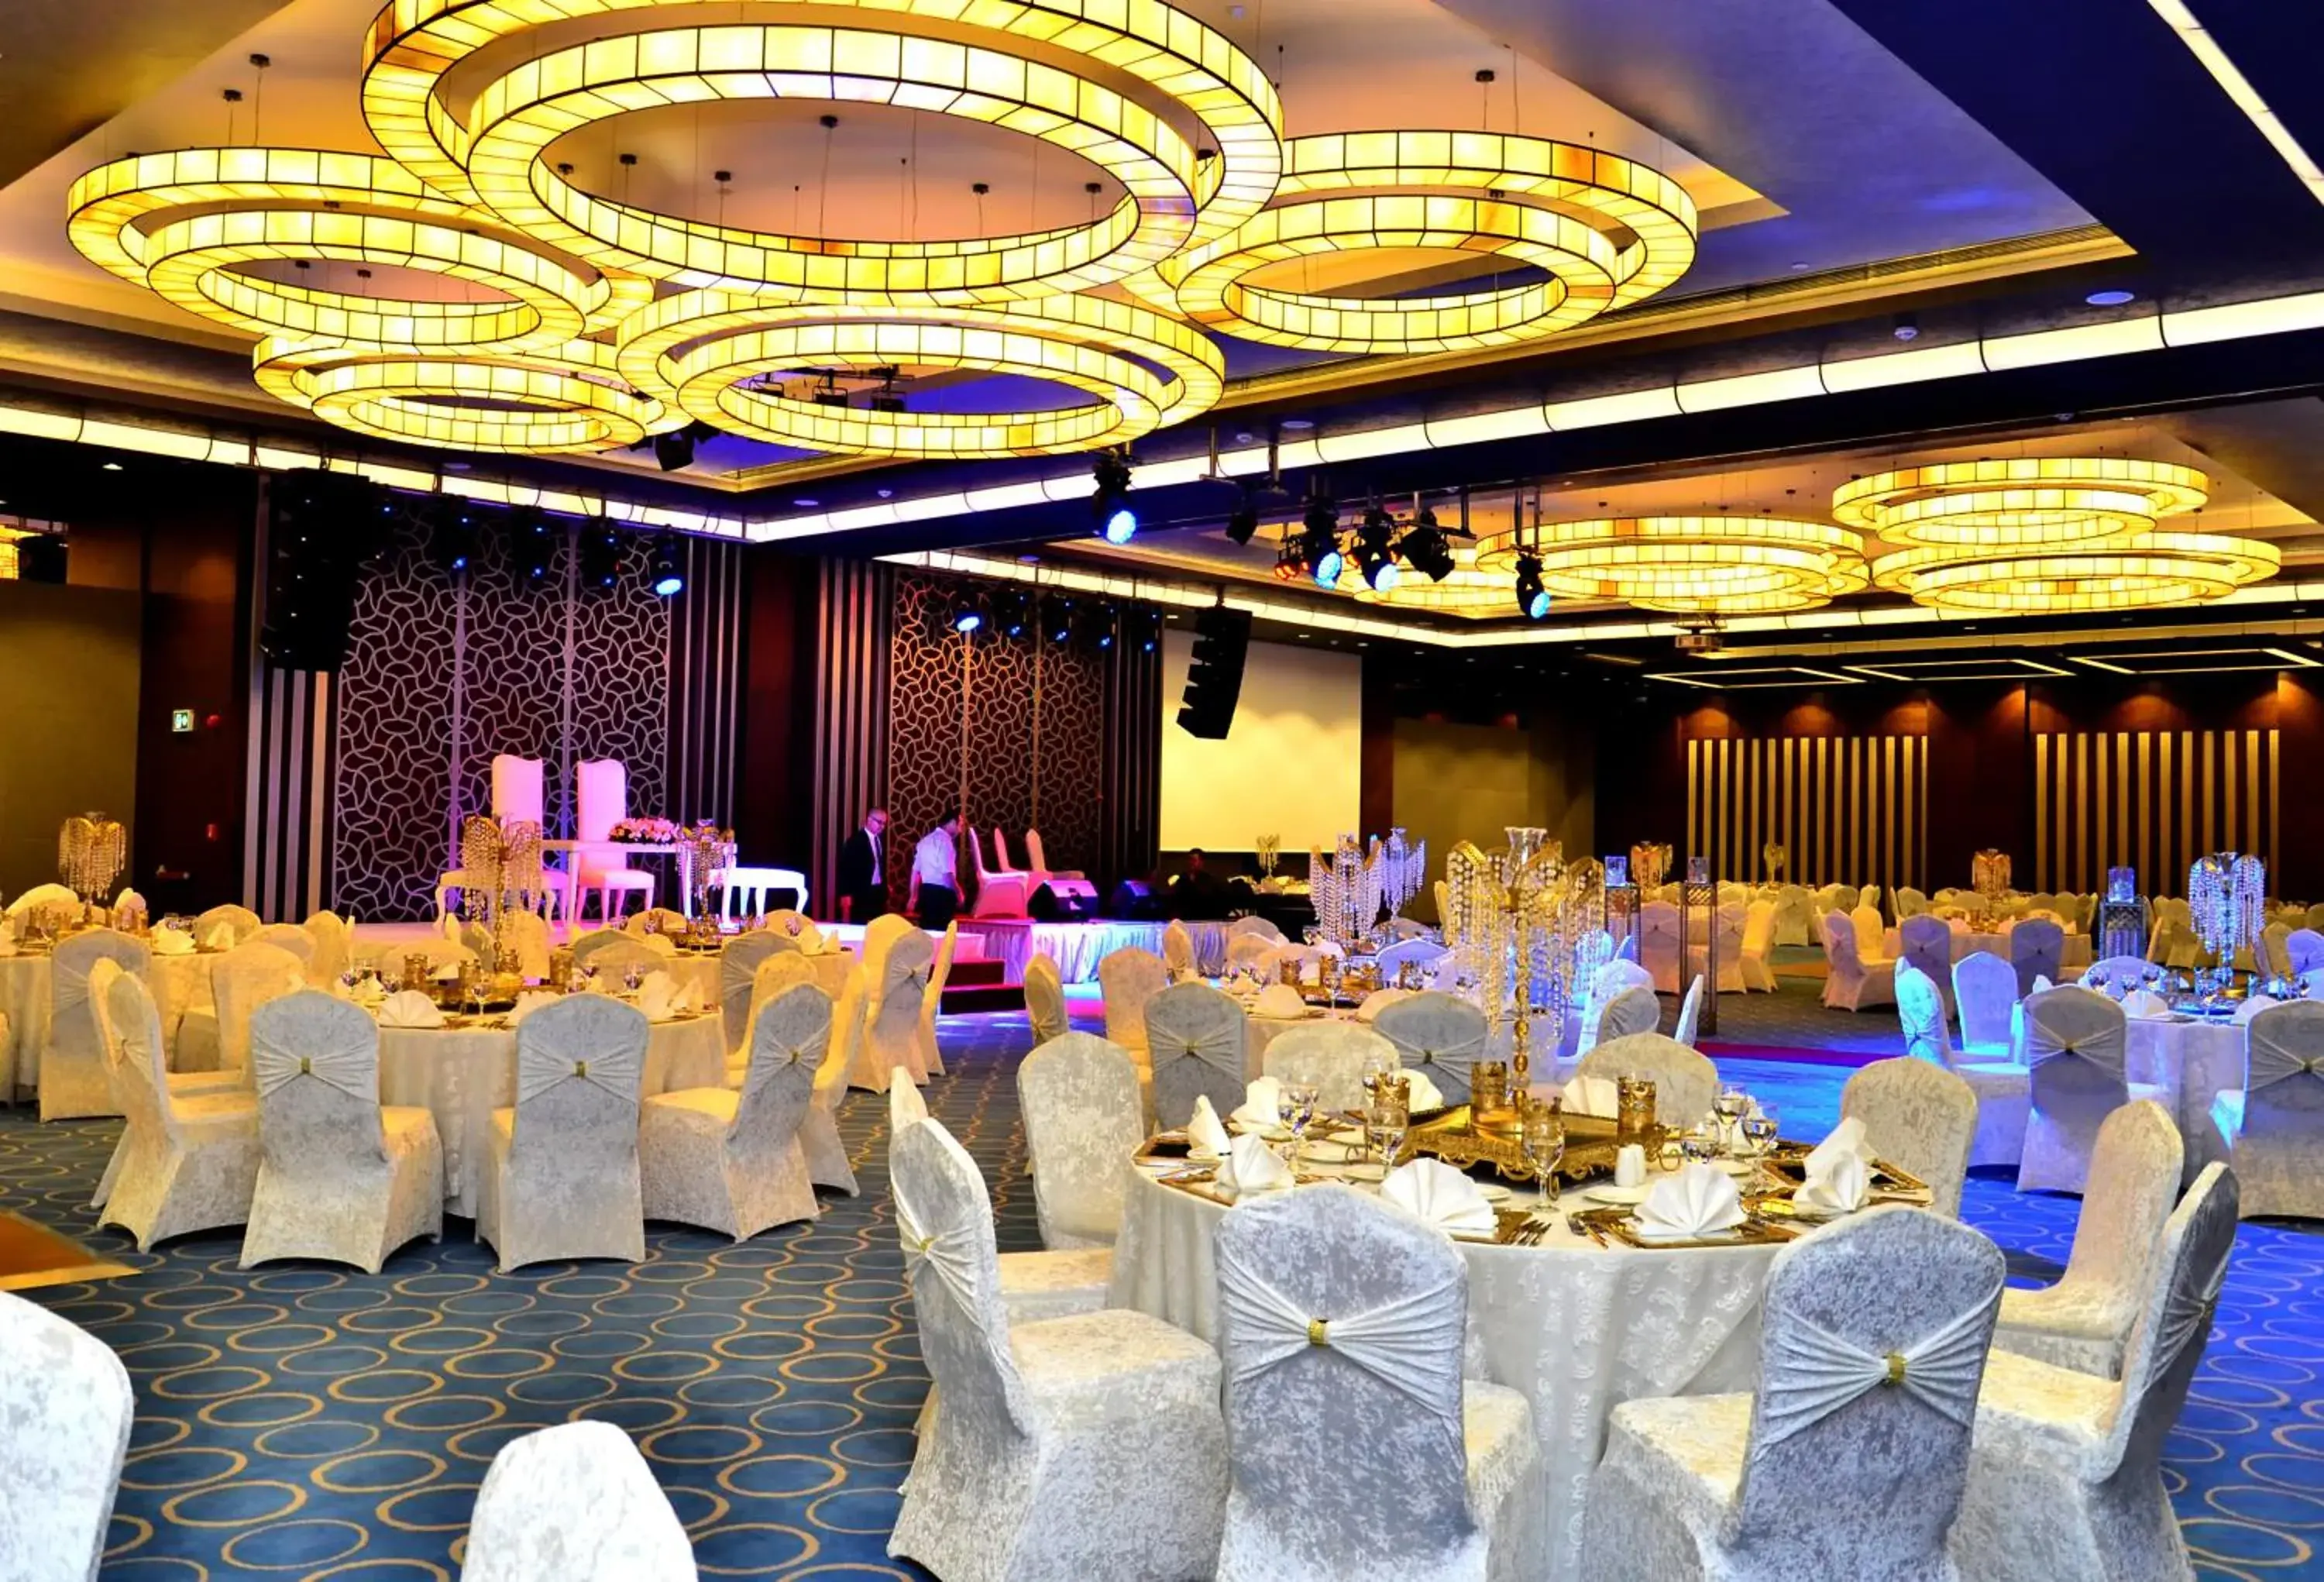 Banquet/Function facilities, Banquet Facilities in Royal Stay Palace Hotel